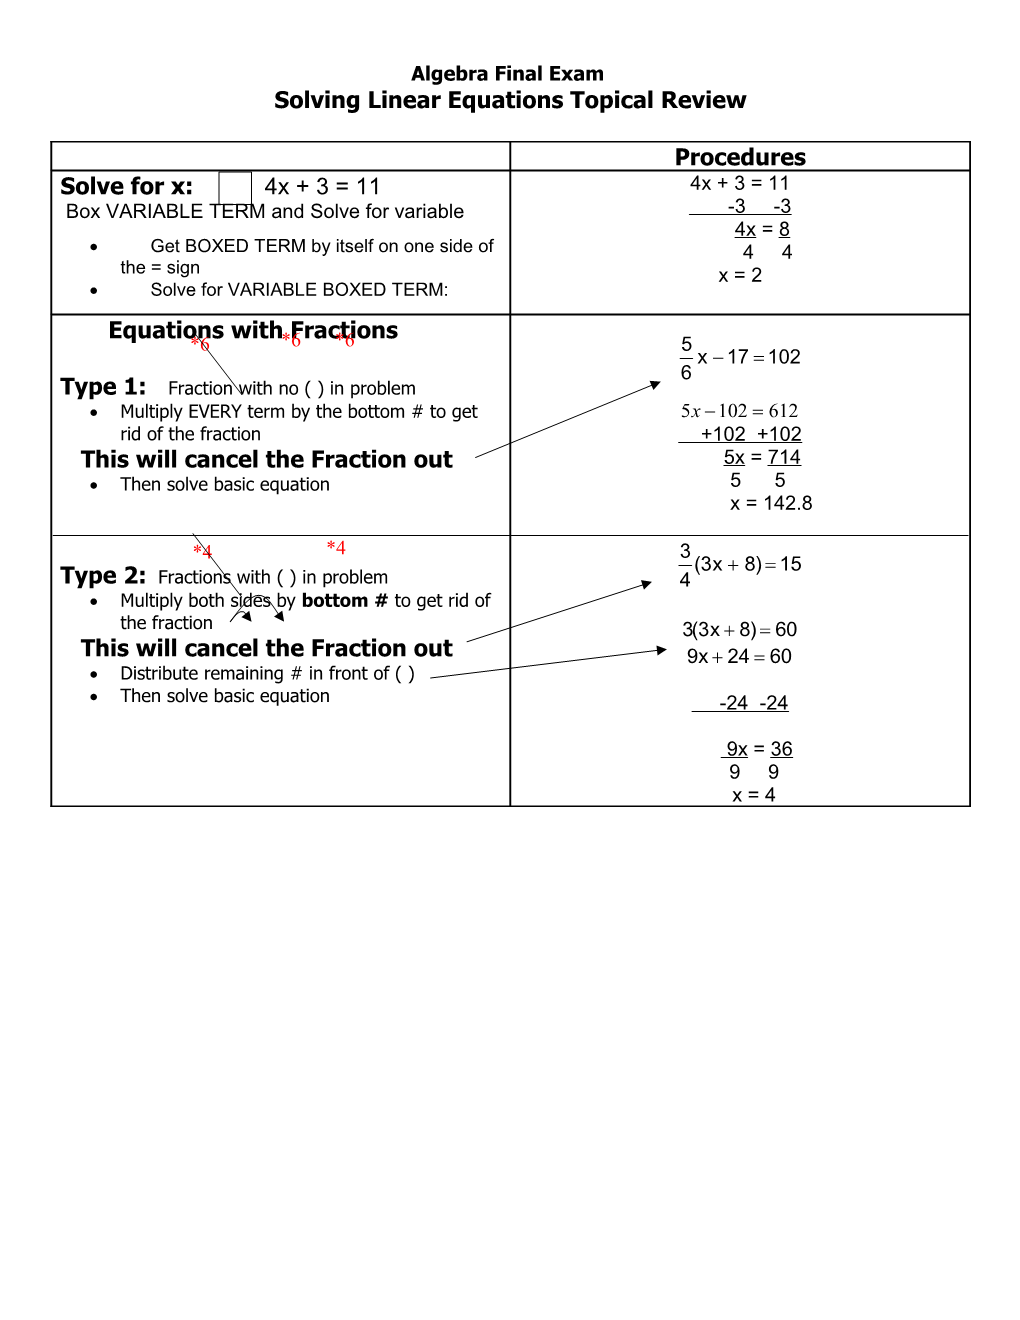 Integrate Algebra Final Exam Topical Review